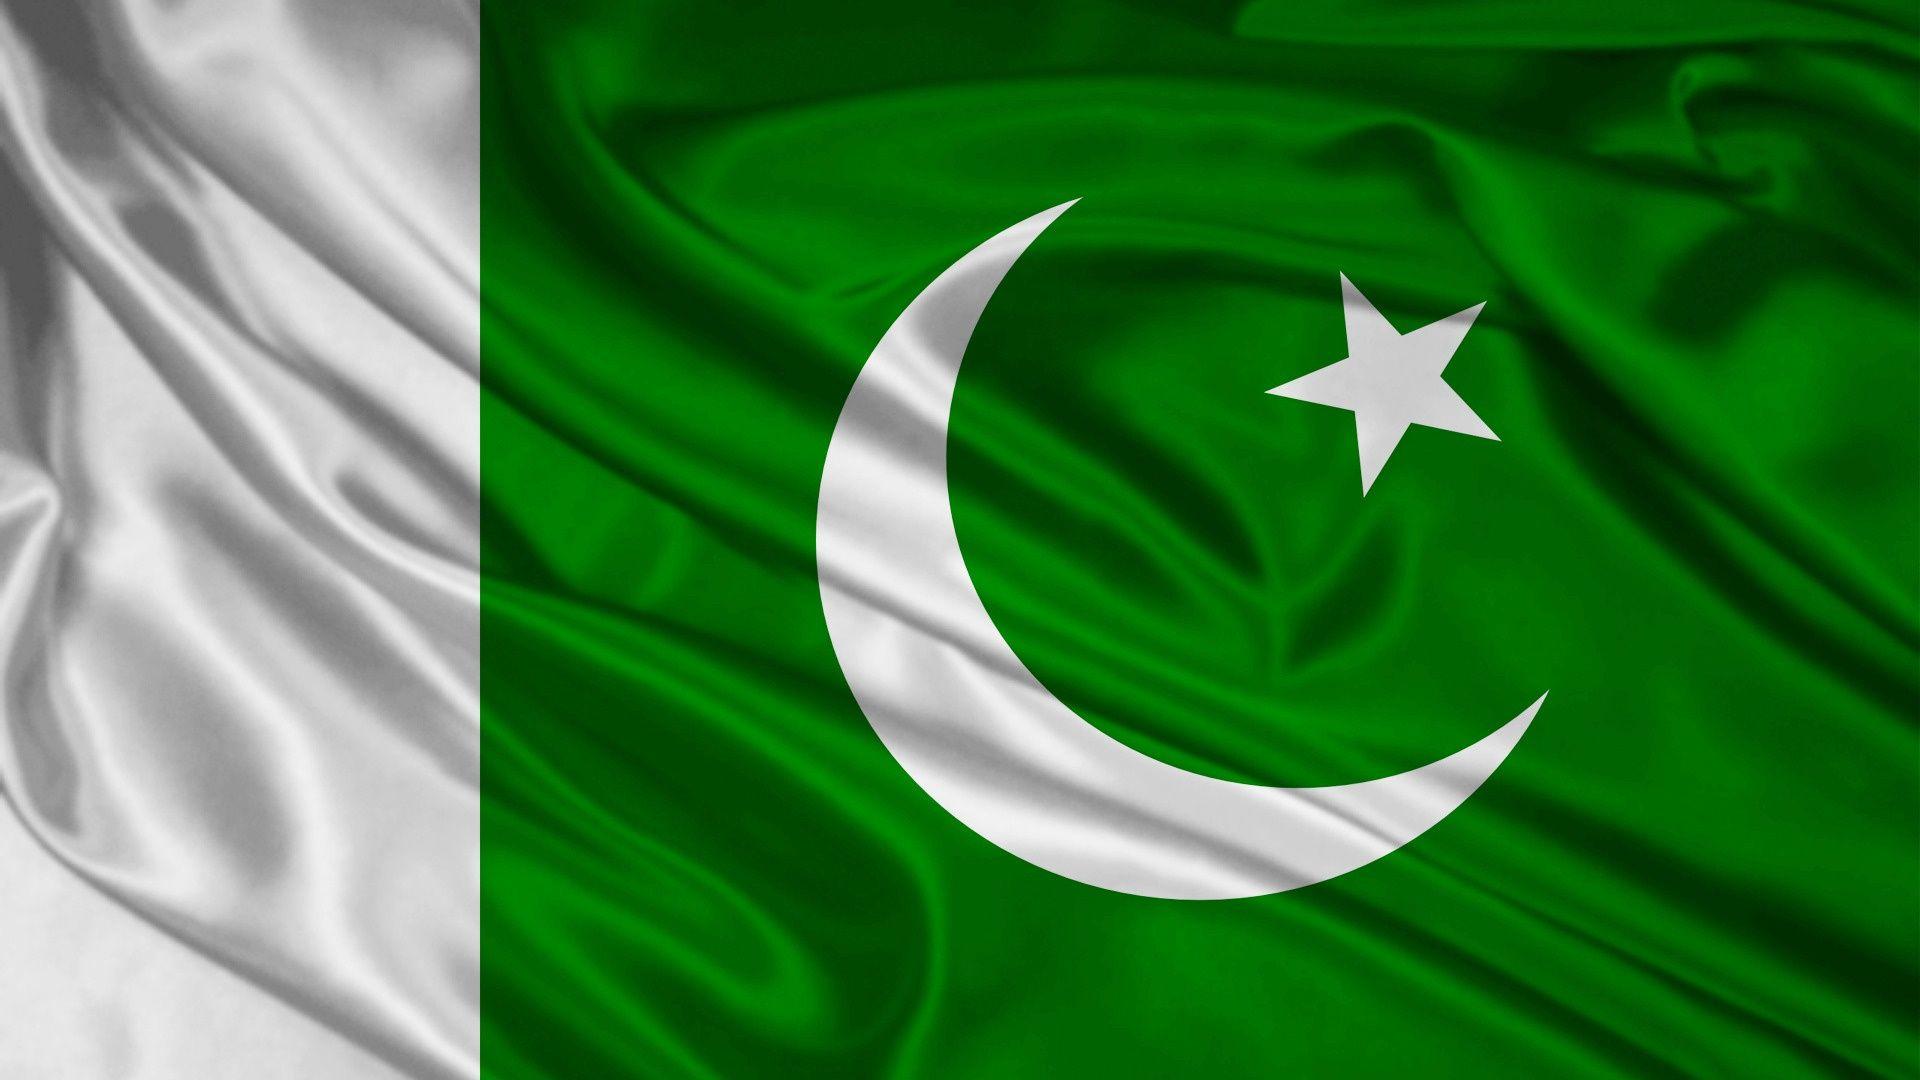 Pakistan Flag, High Definition, High Quality, Widescreen